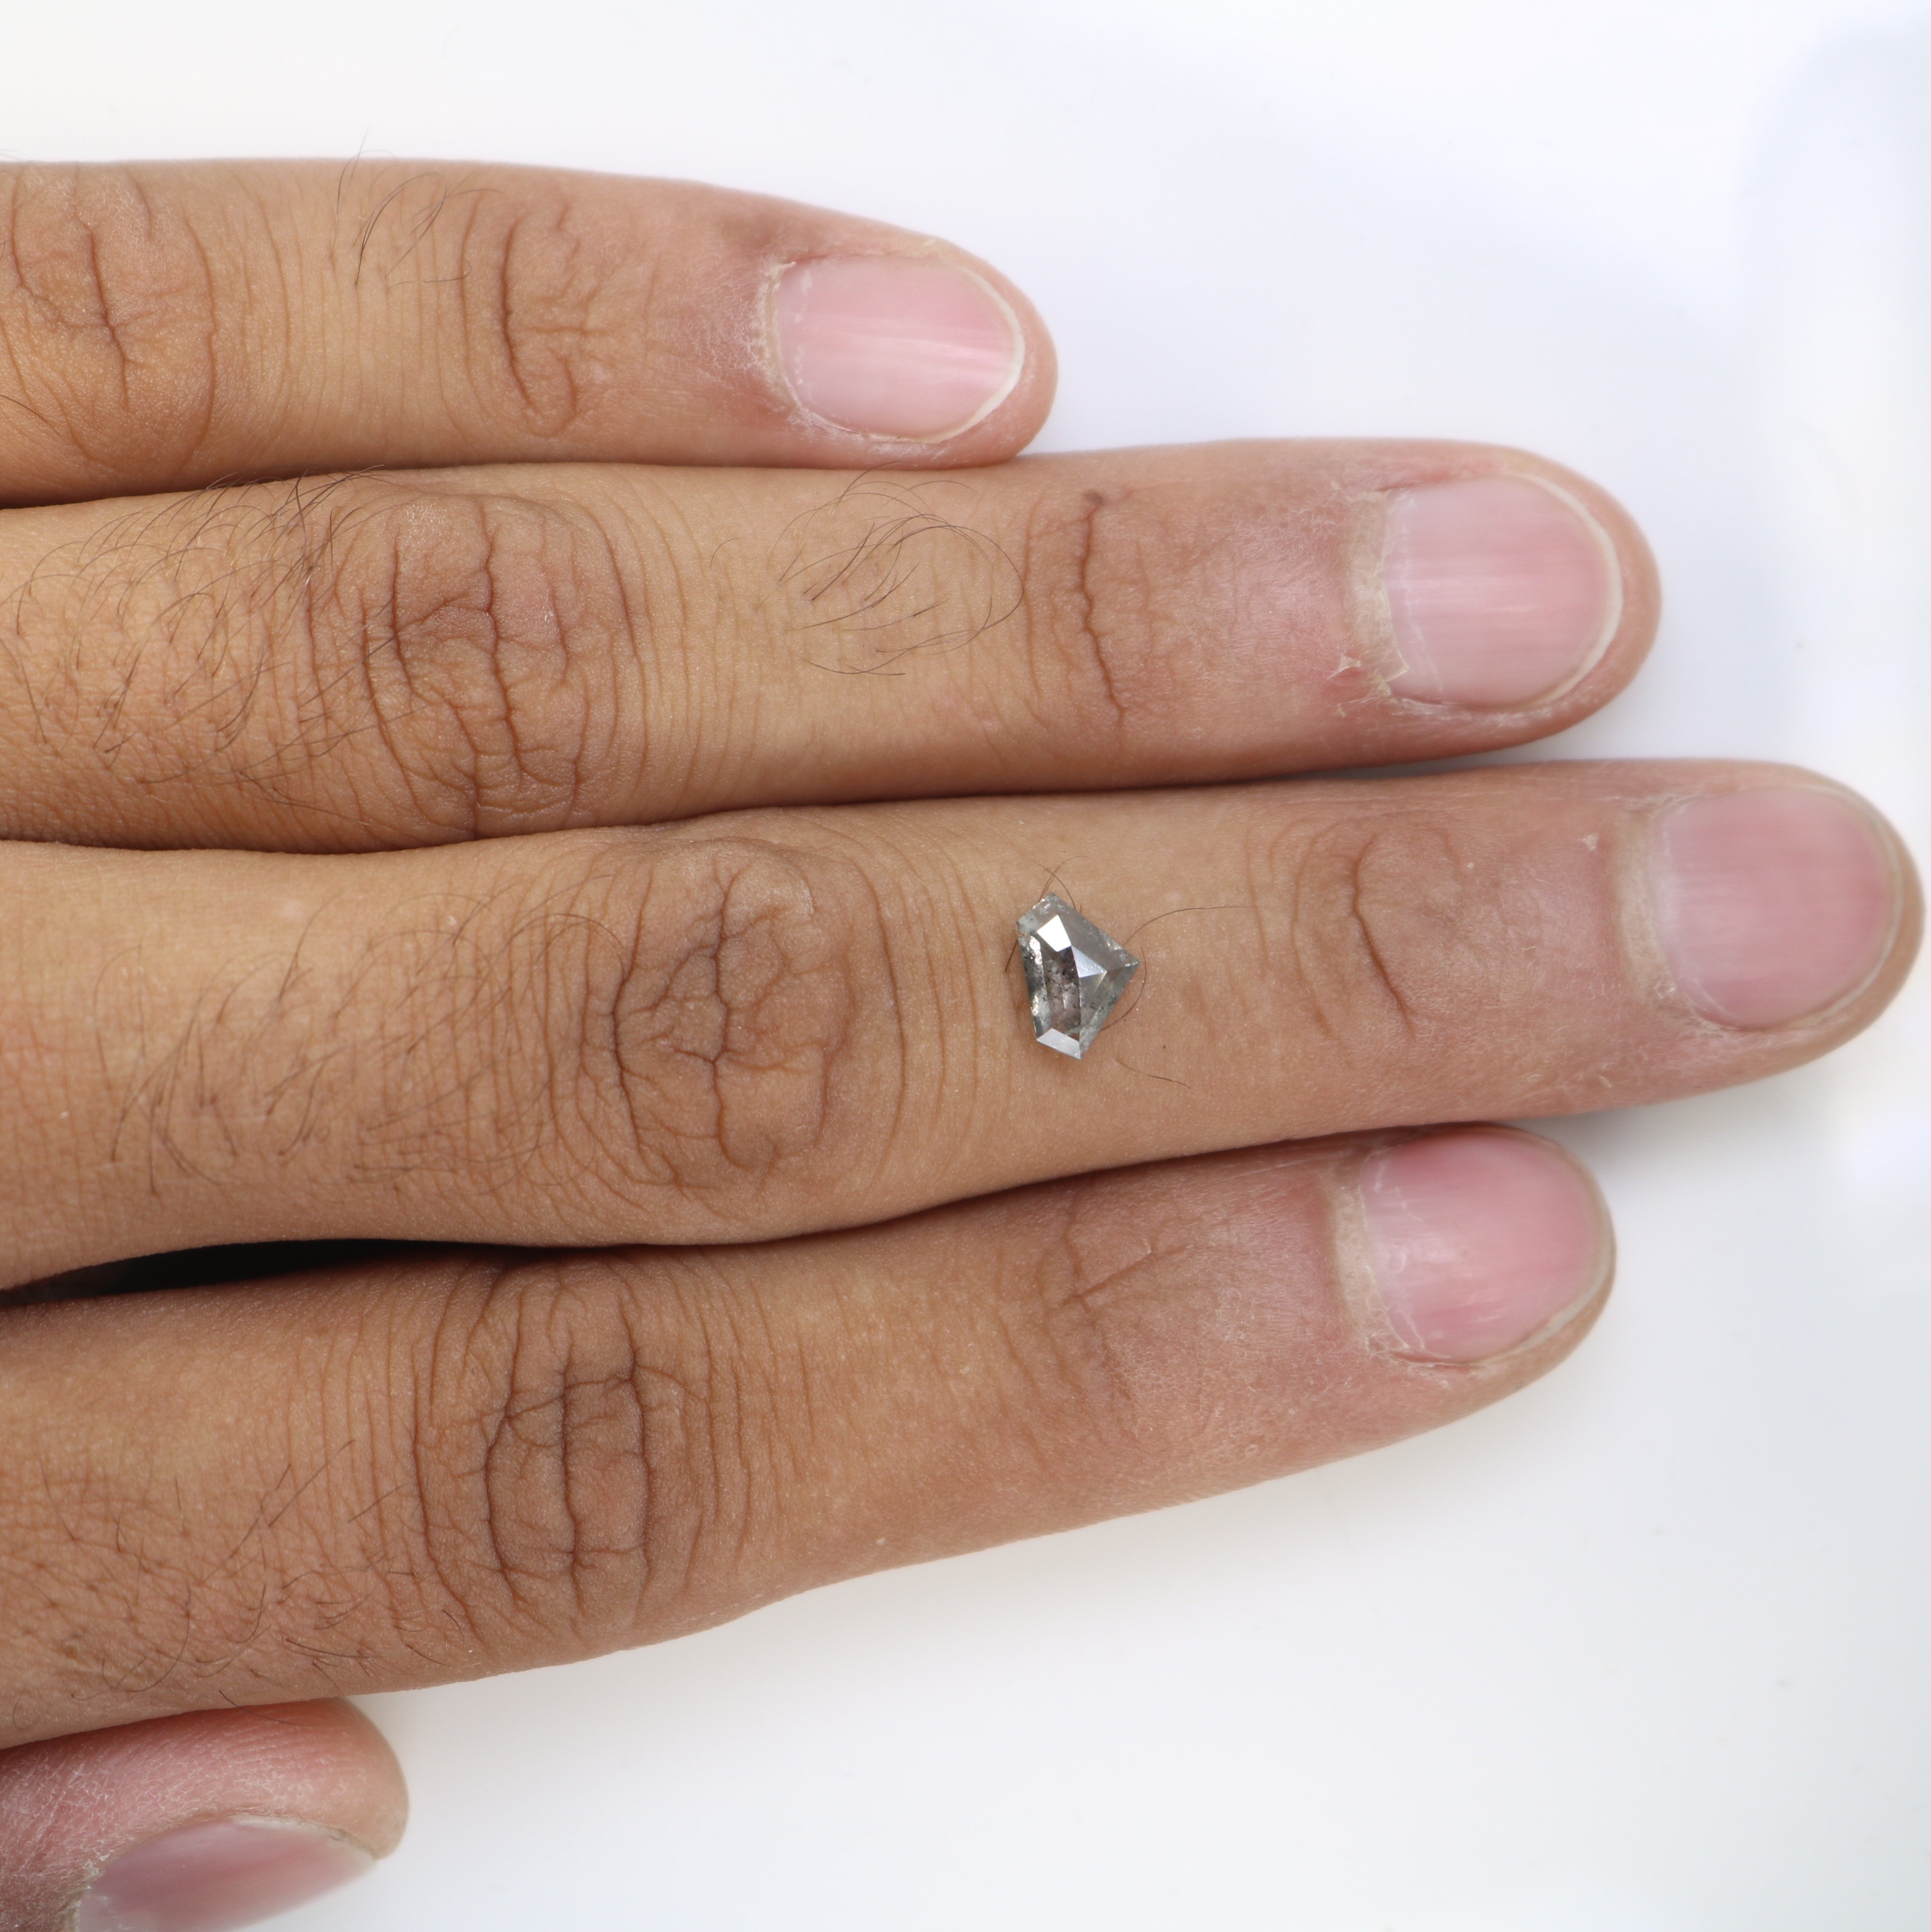 0.93 Carat Diamond Shape Loose Salt And Pepper Diamond For Engagement Ring